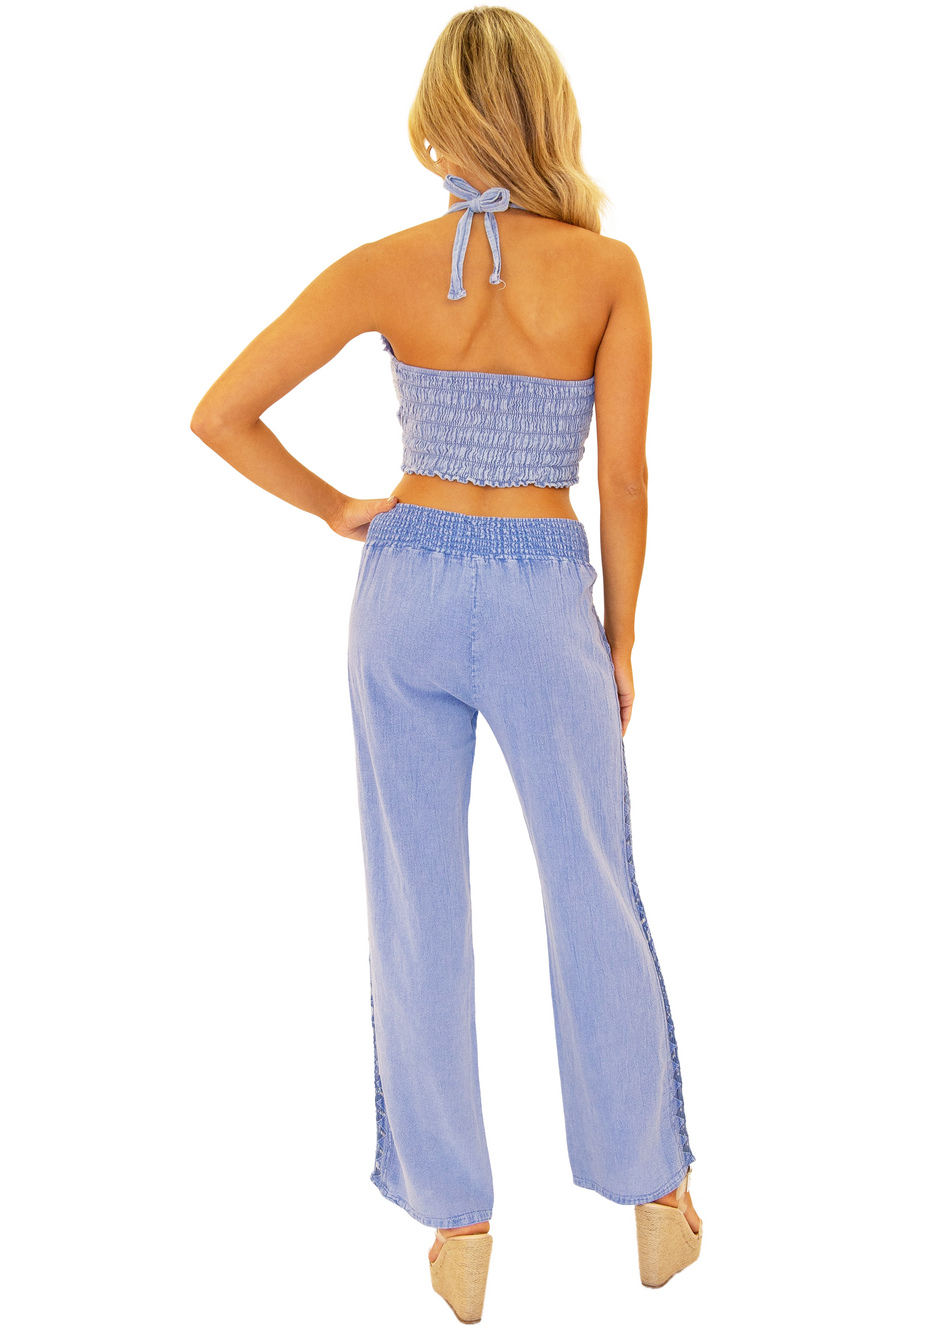 NW1275 - Blue Cotton Pants